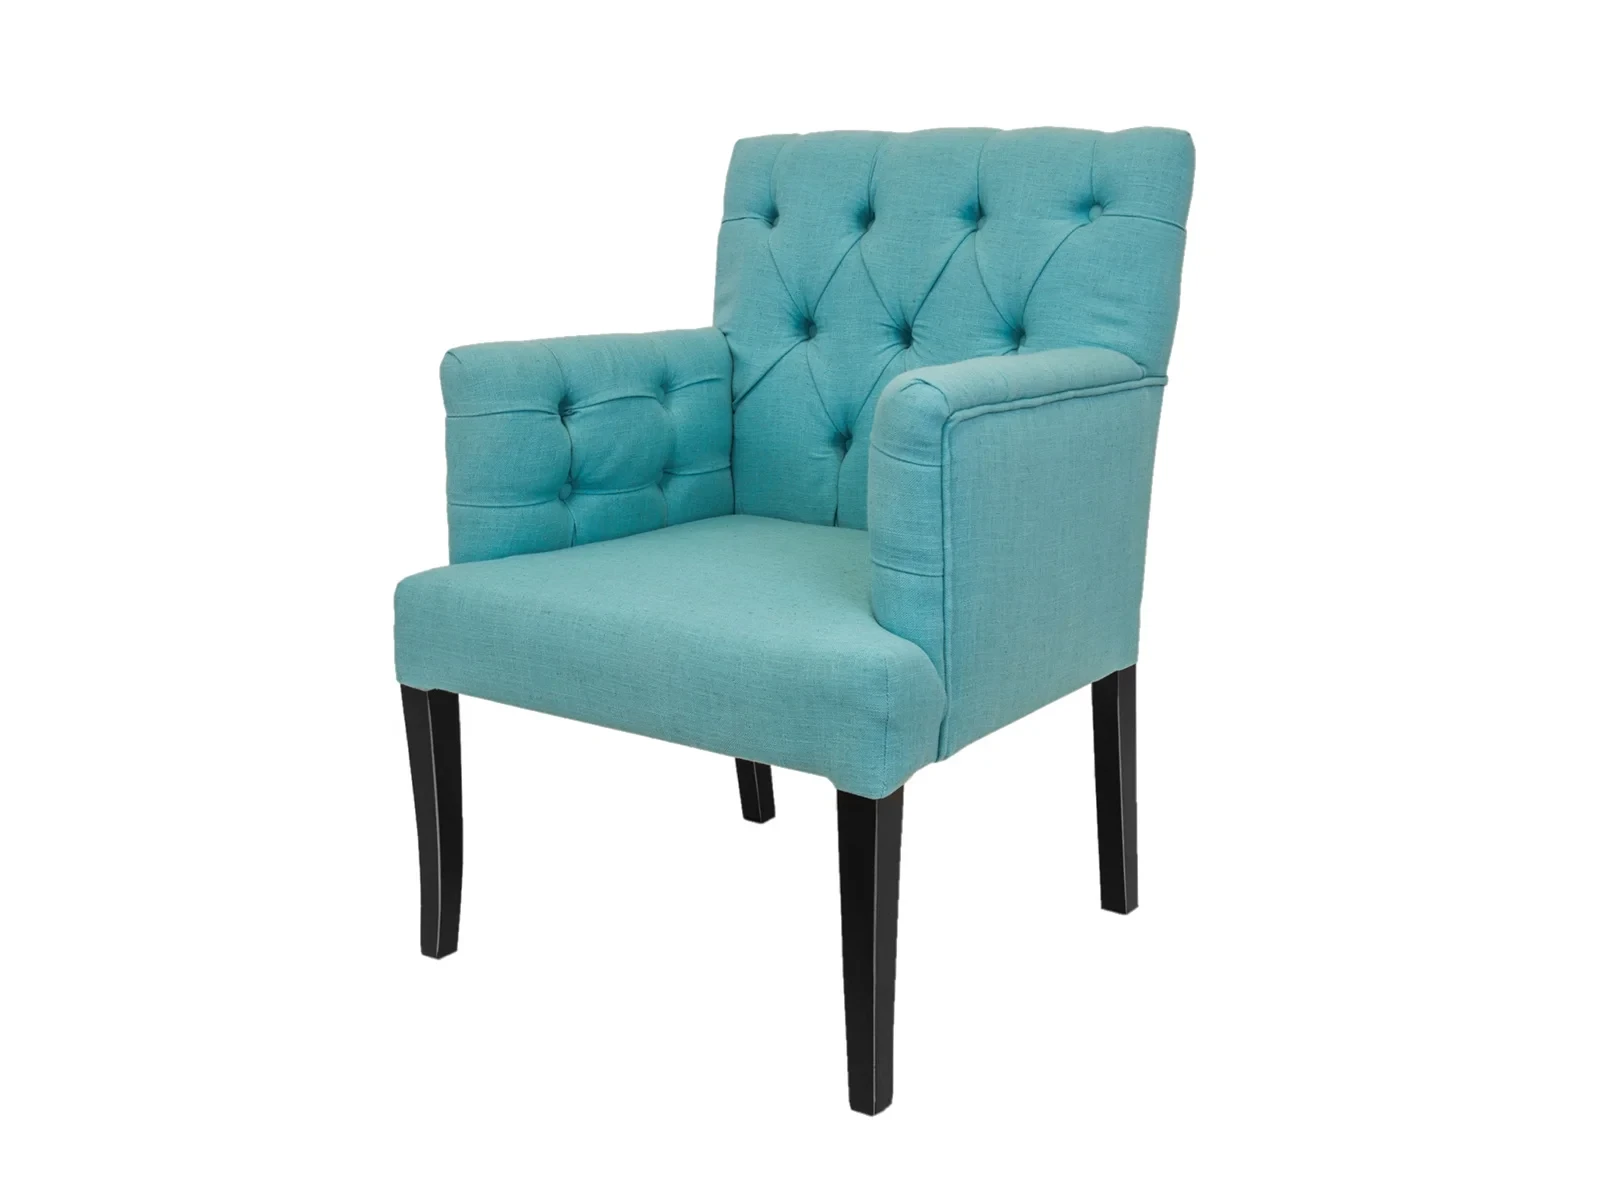 Кресло Zander blue 625194